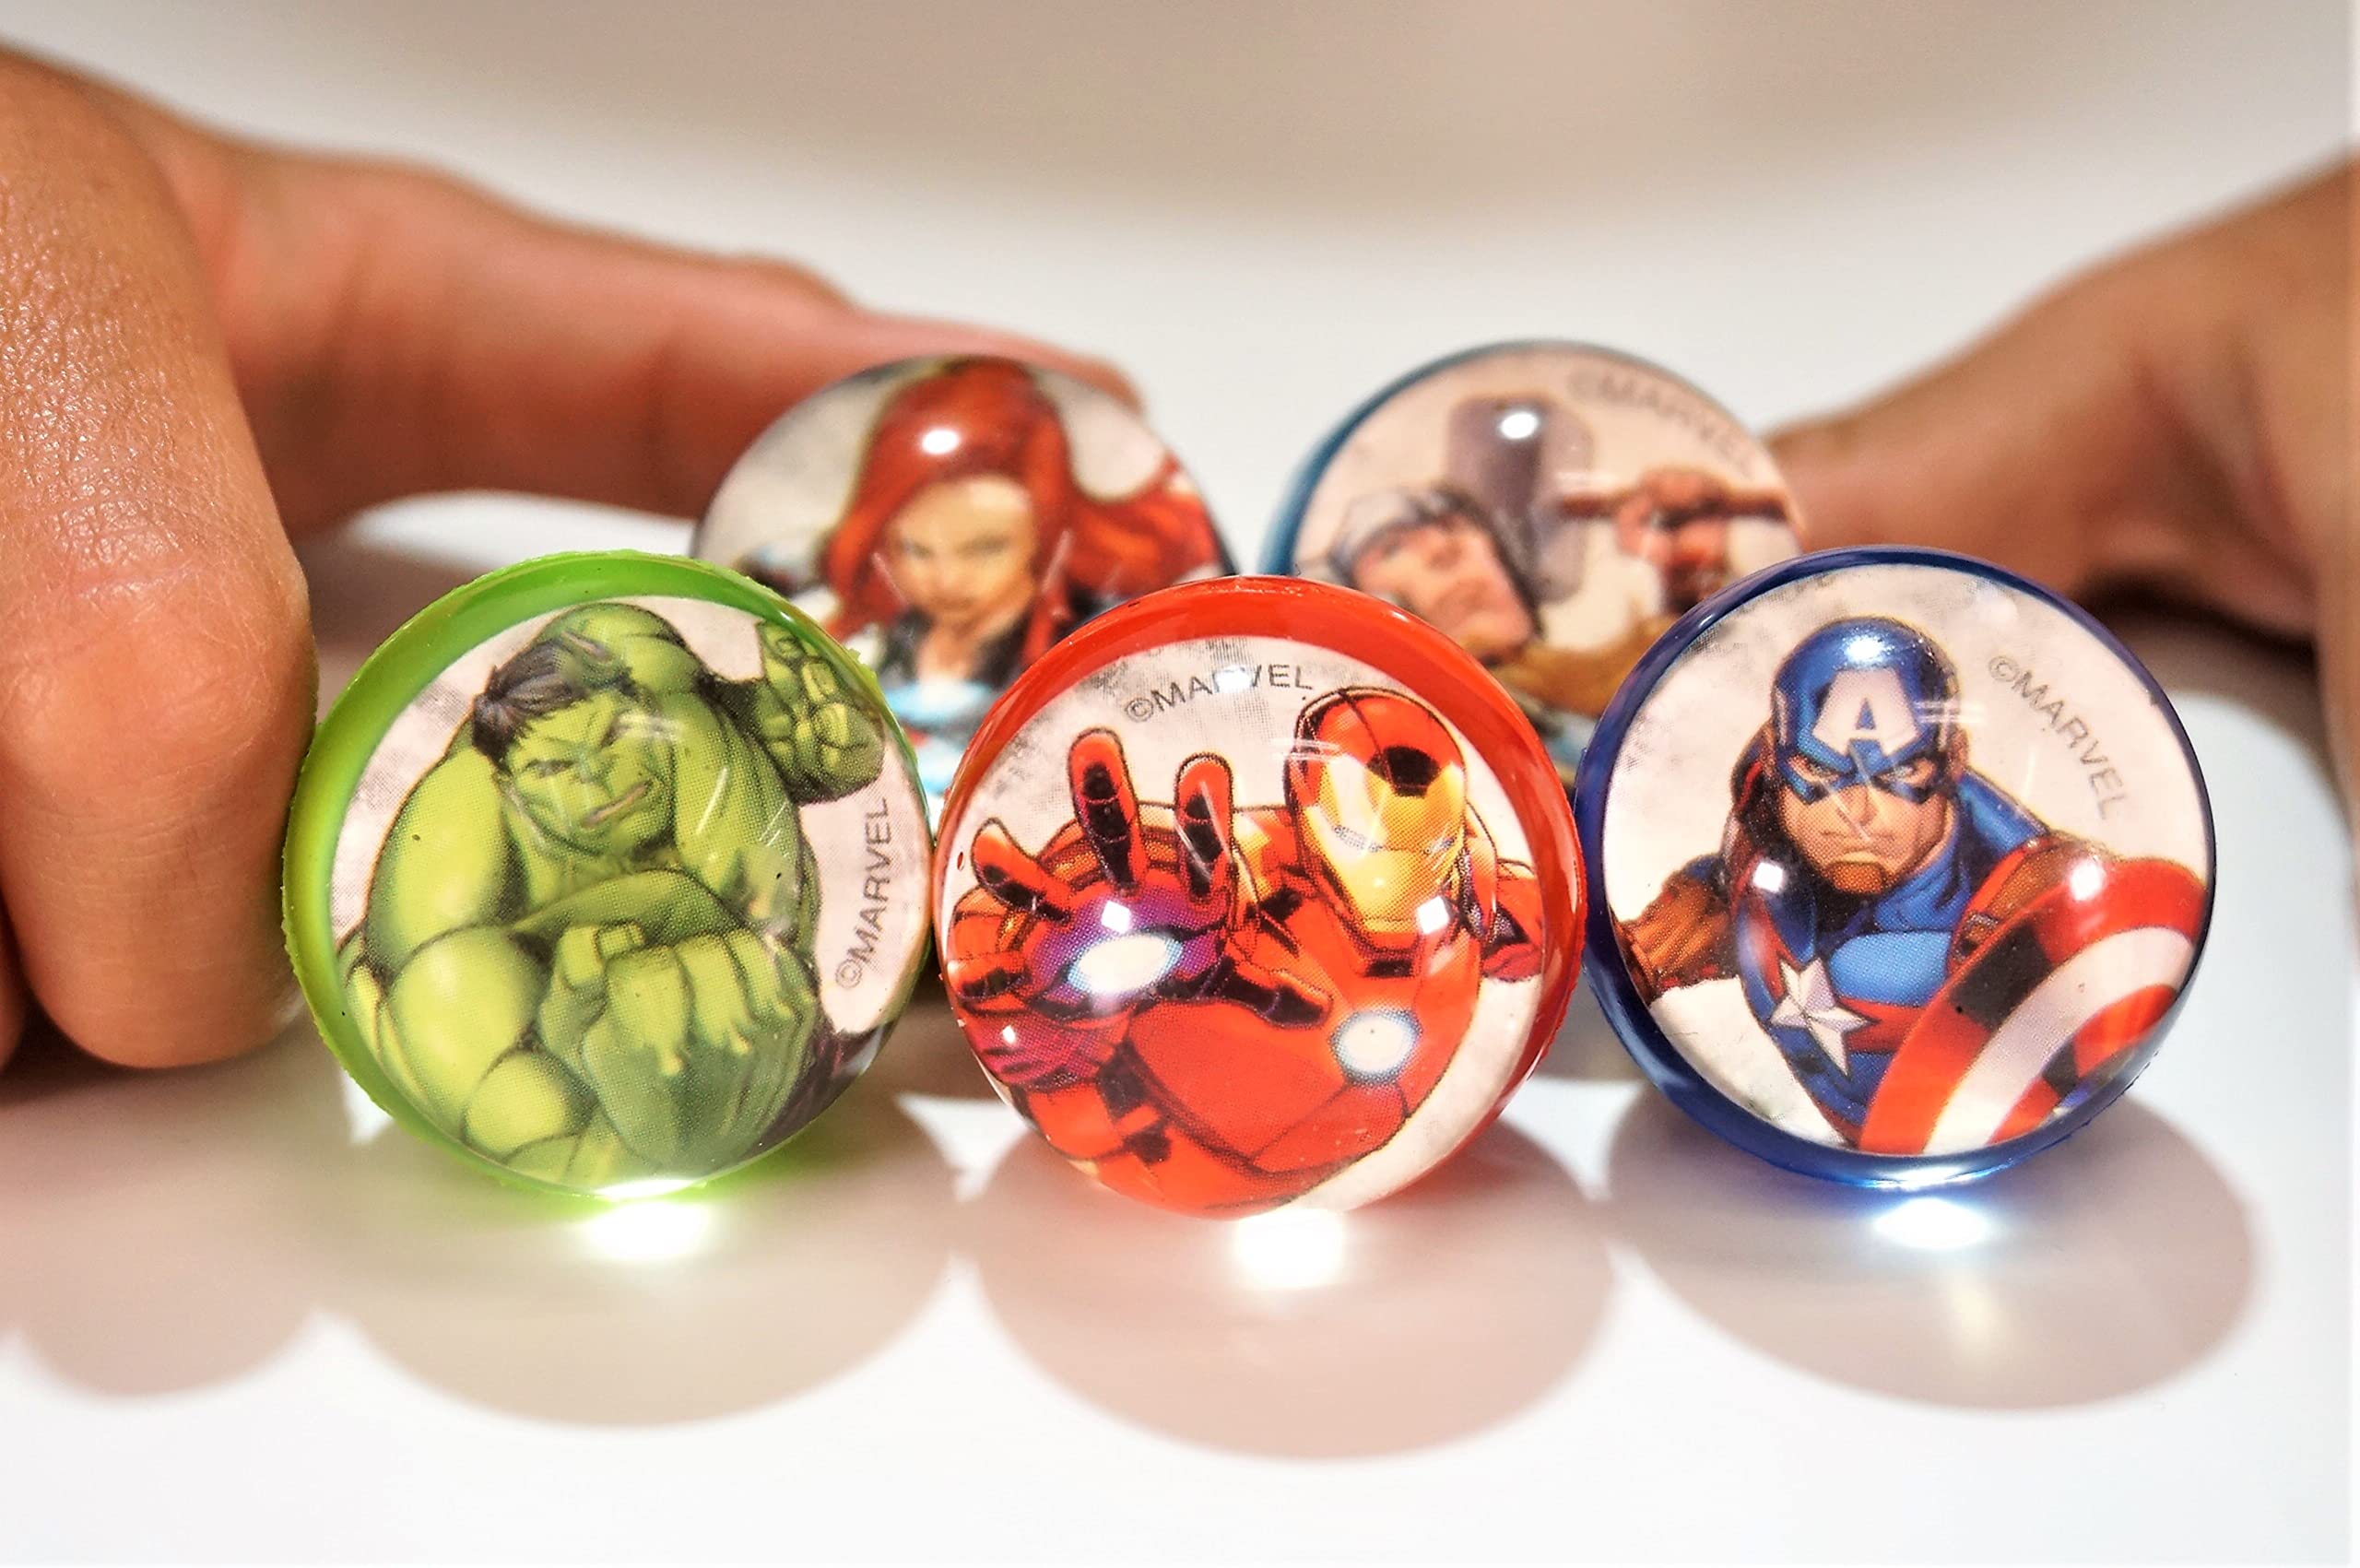 JA-RU Marvel Spiderman Bouncy Balls Superballs Super Hi Bounce 1.2